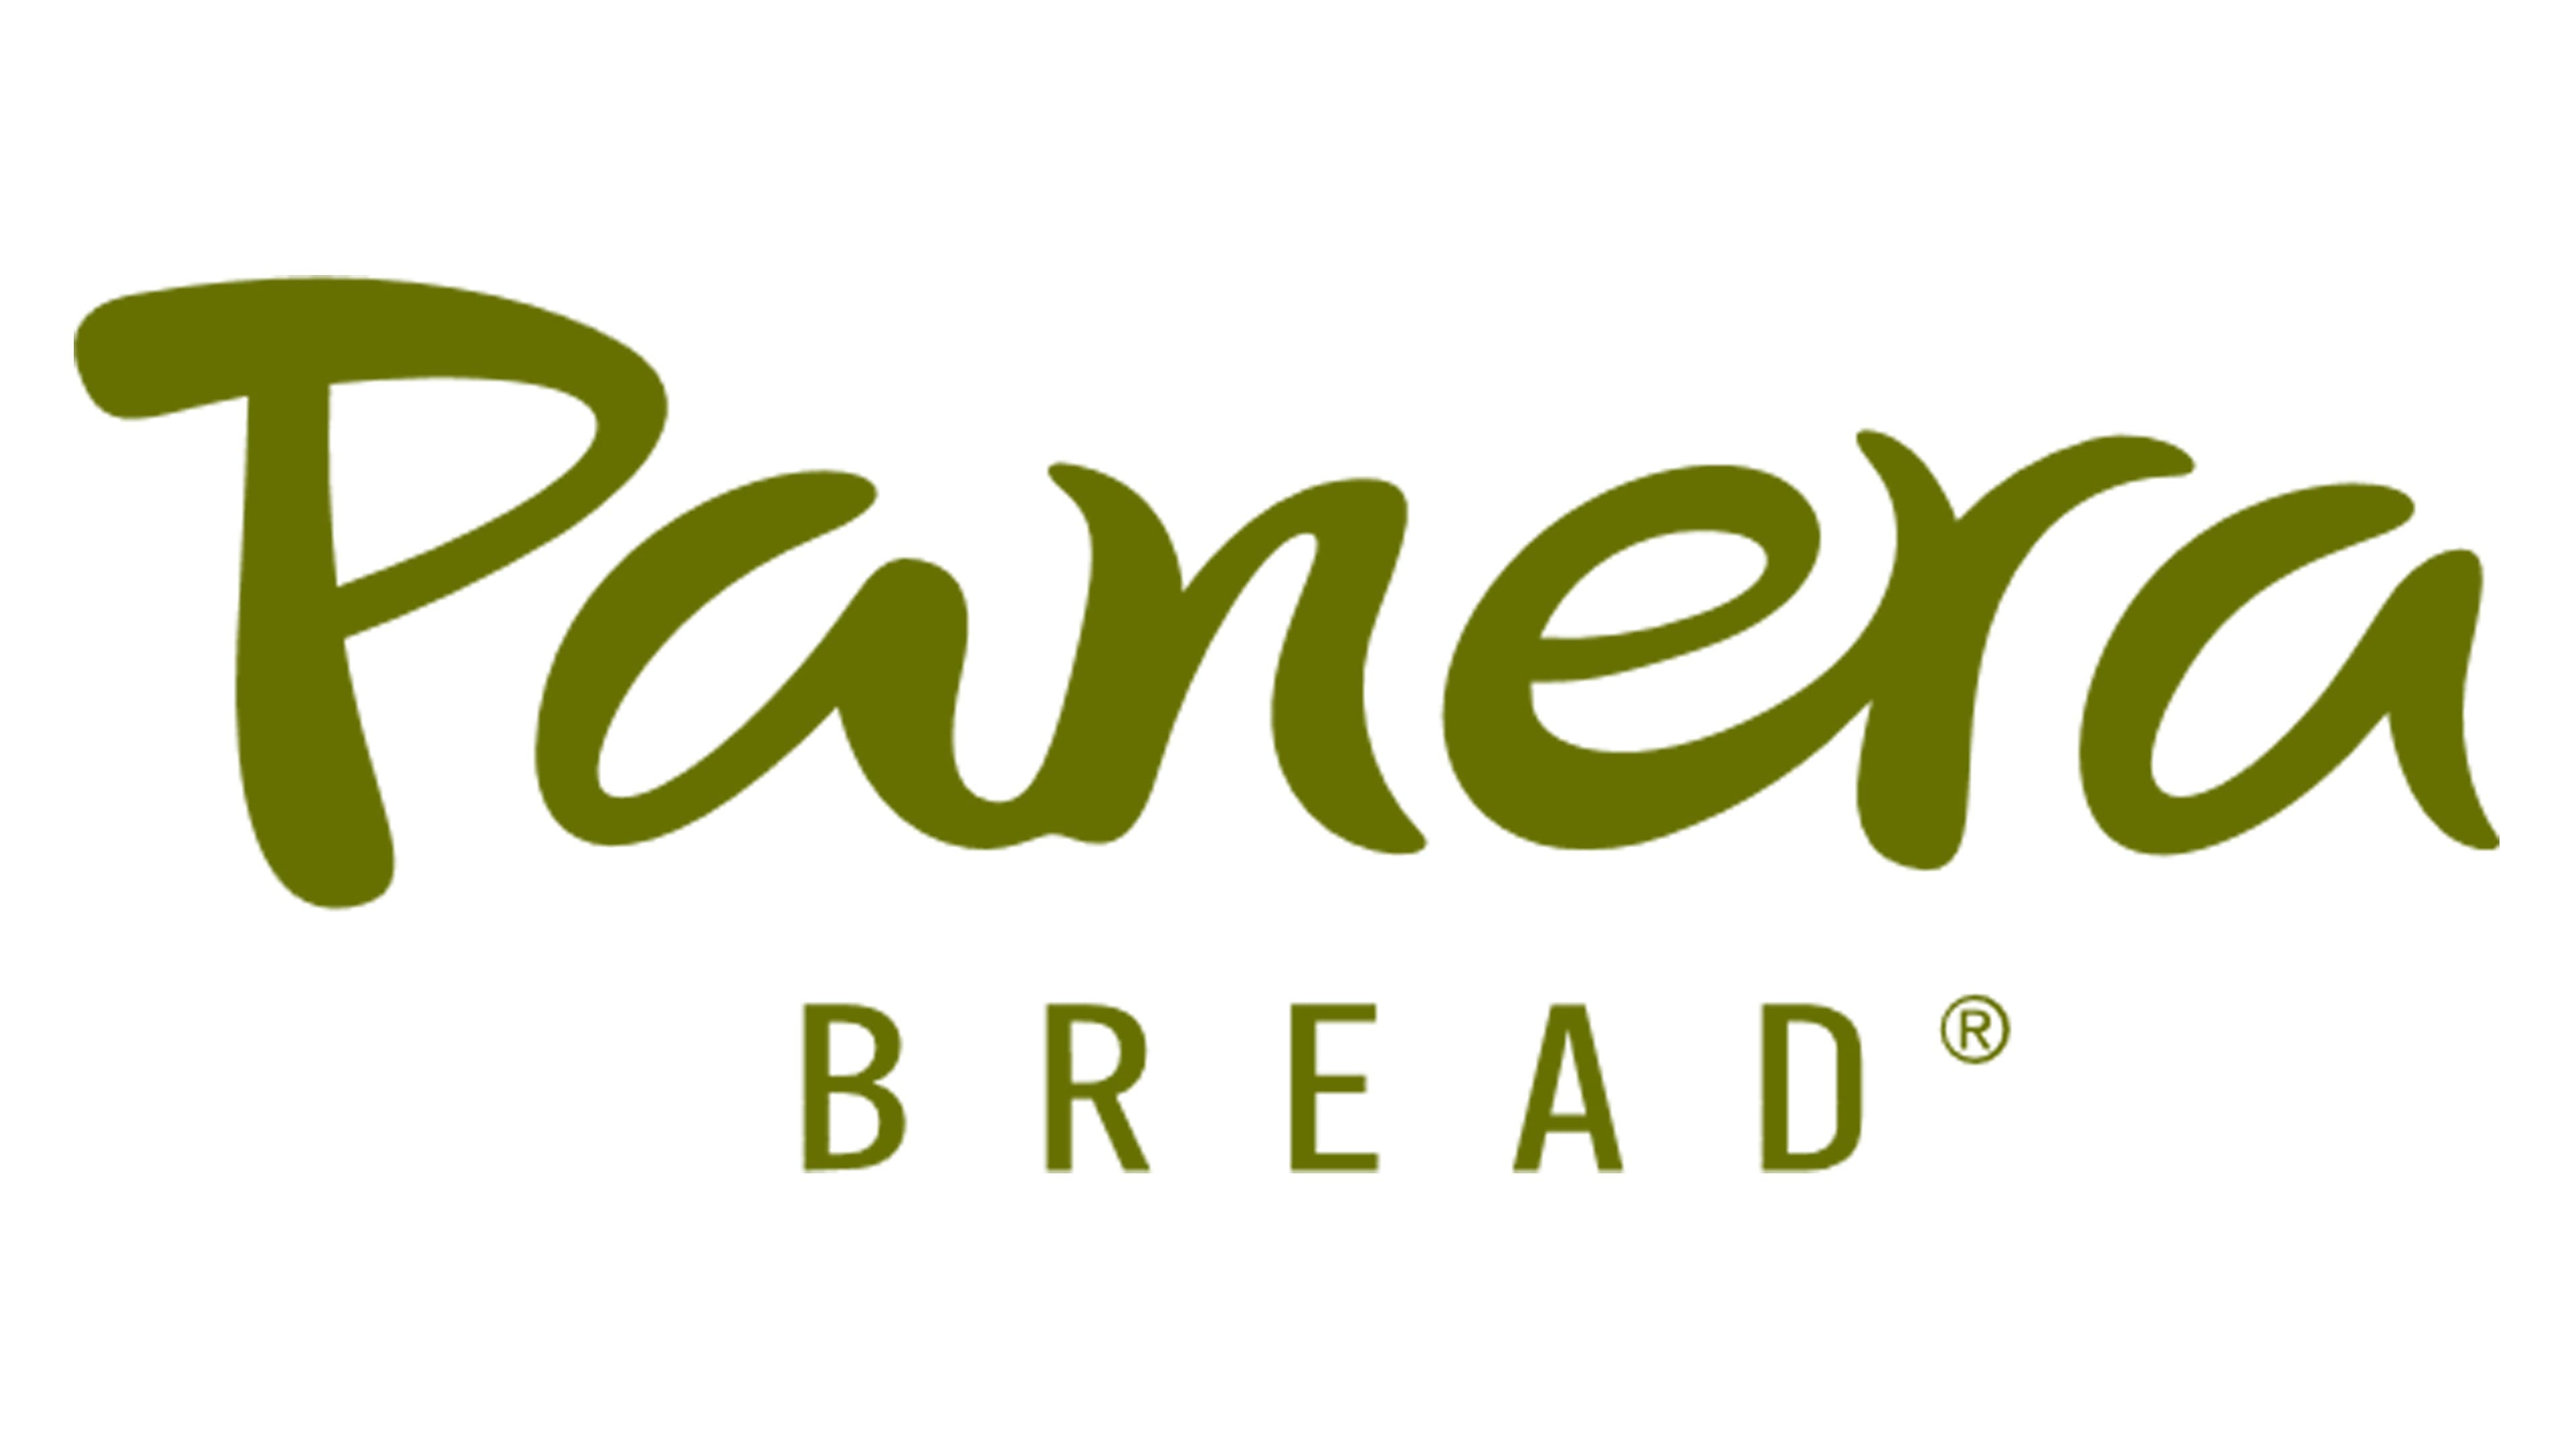 bread bakery baked editable logo Template | PosterMyWall